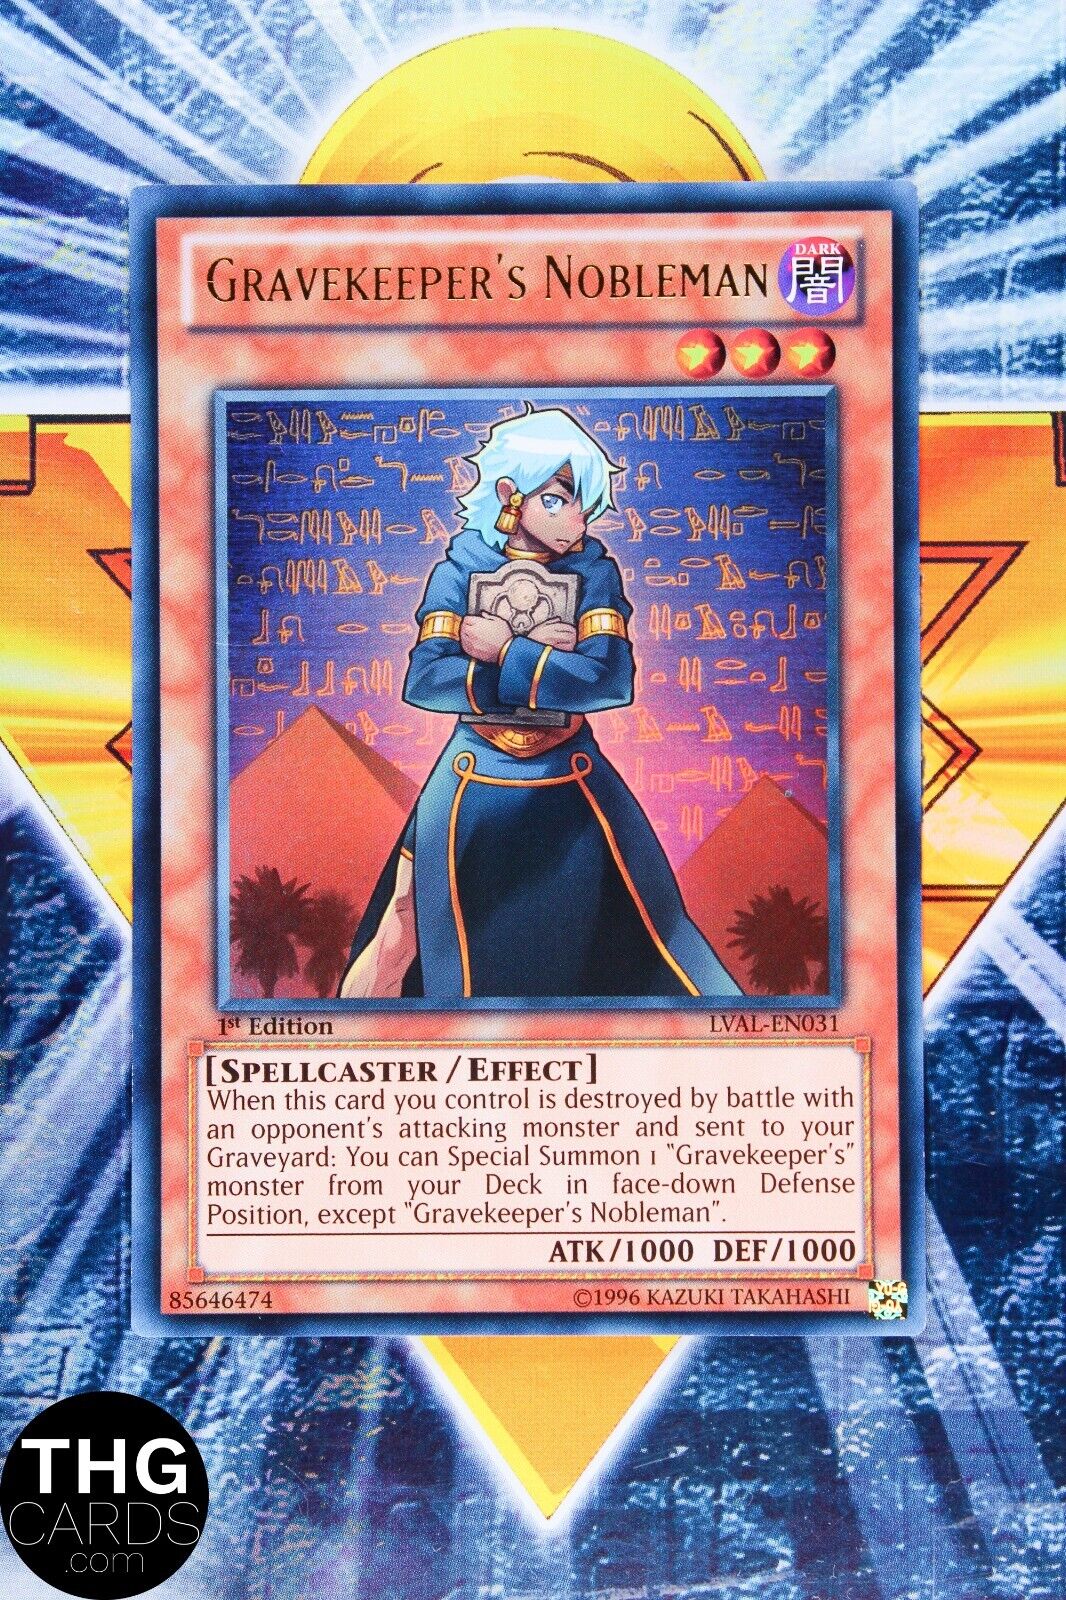 Gravekeeper's Nobleman LVAL-EN031 1st Edition Ultra Rare Yugioh Card